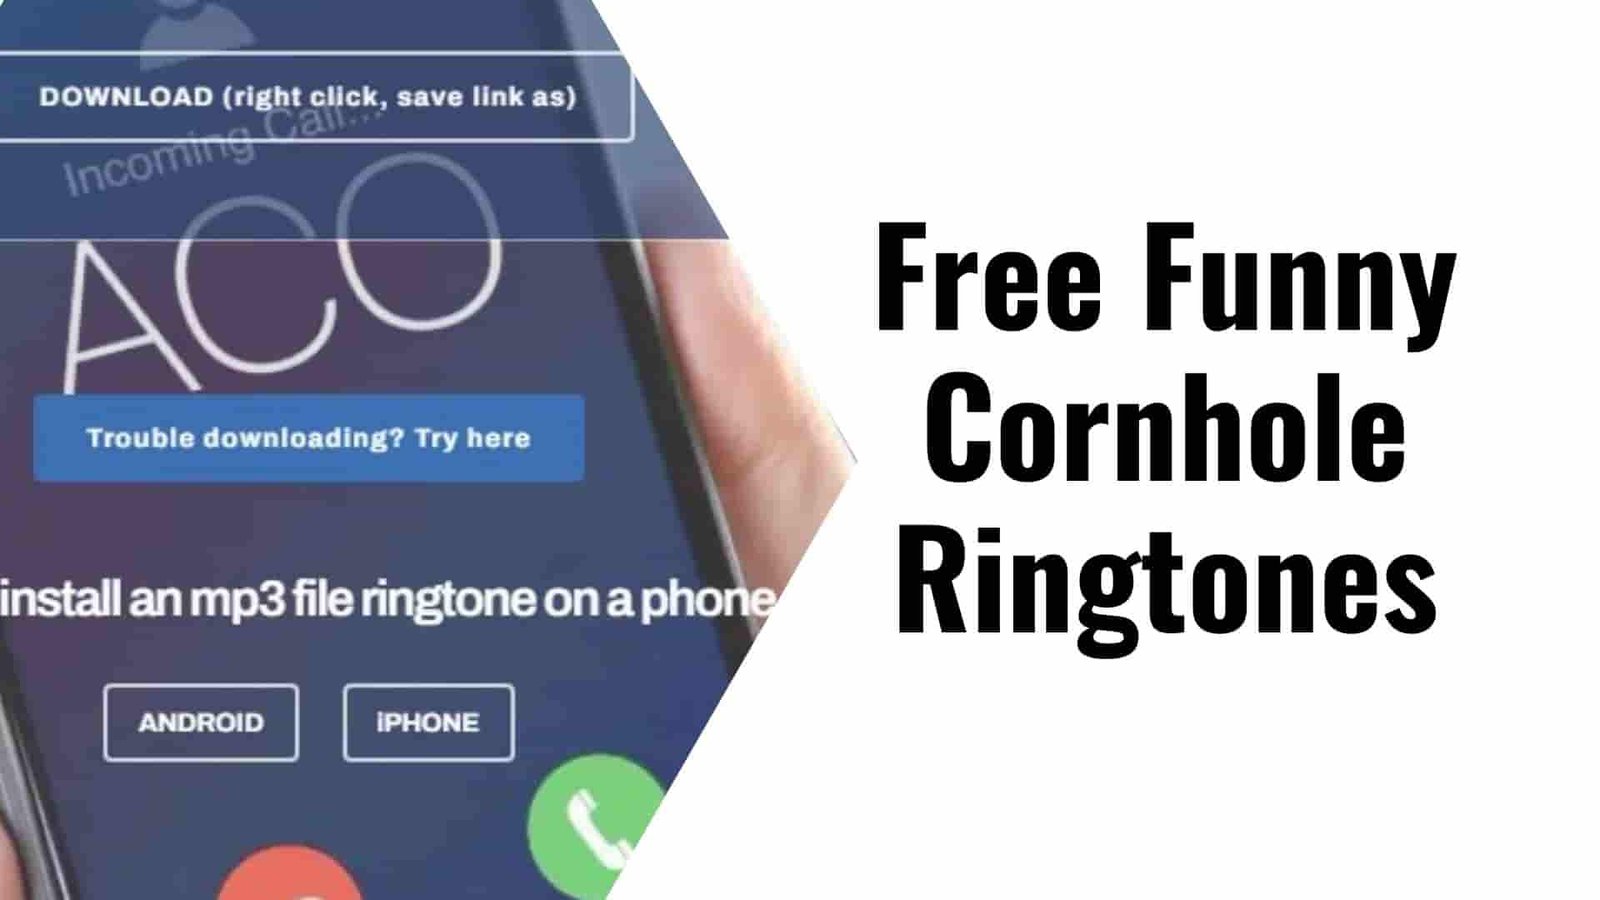 Free Funny Cornhole Ringtones